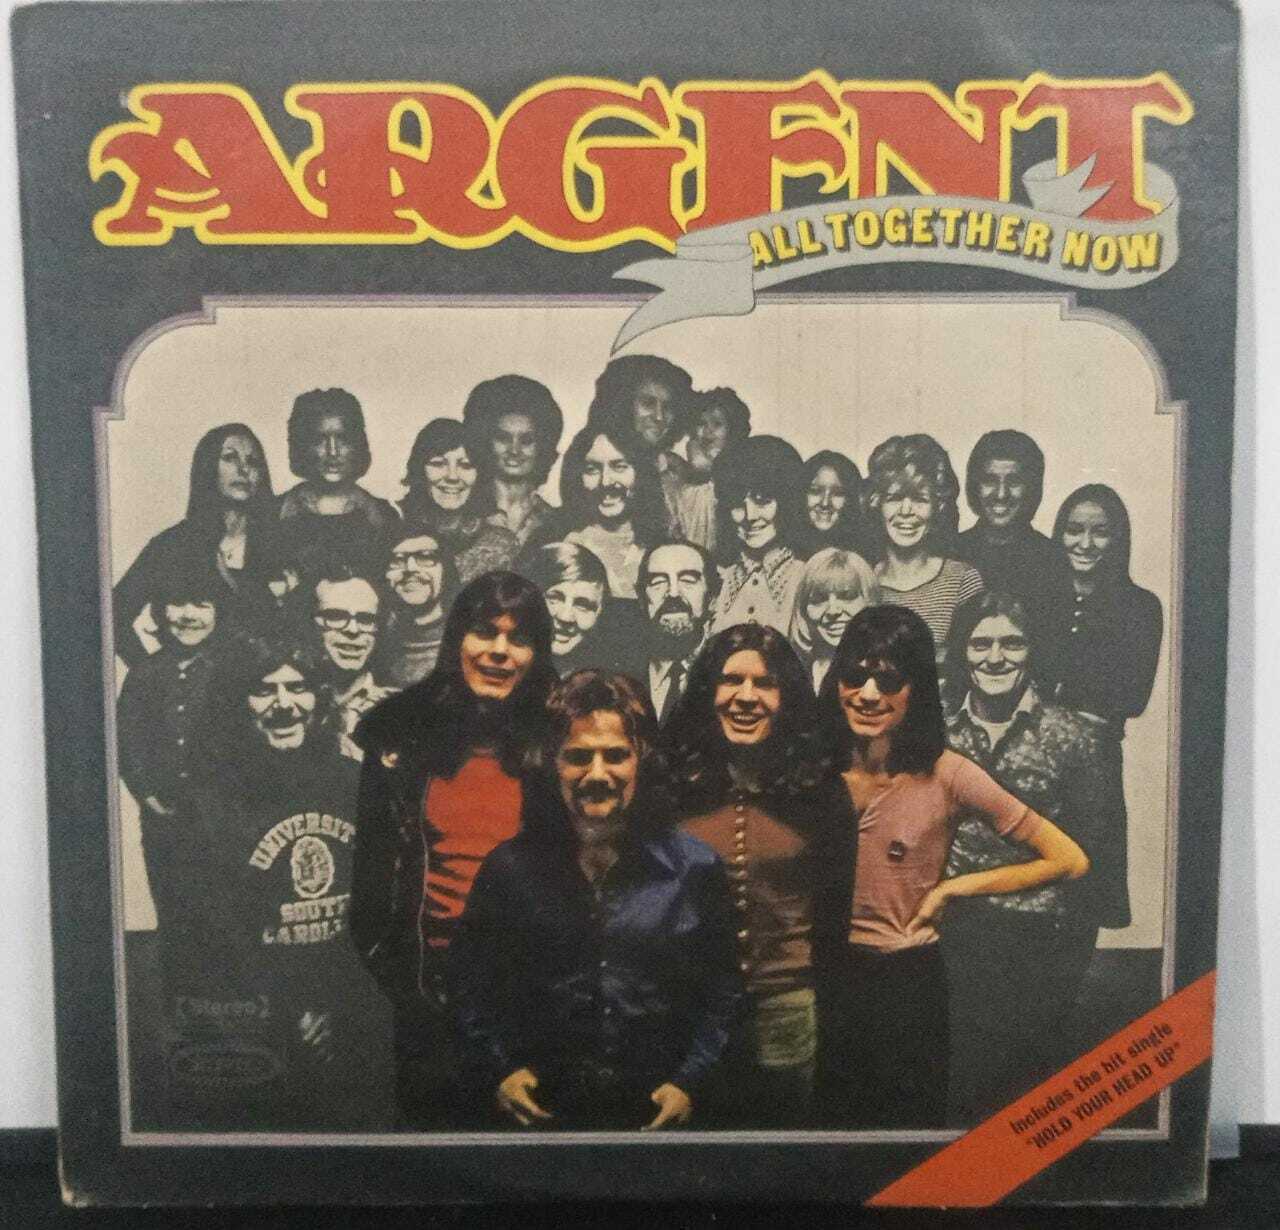 Vinil - Argent - All Together Now